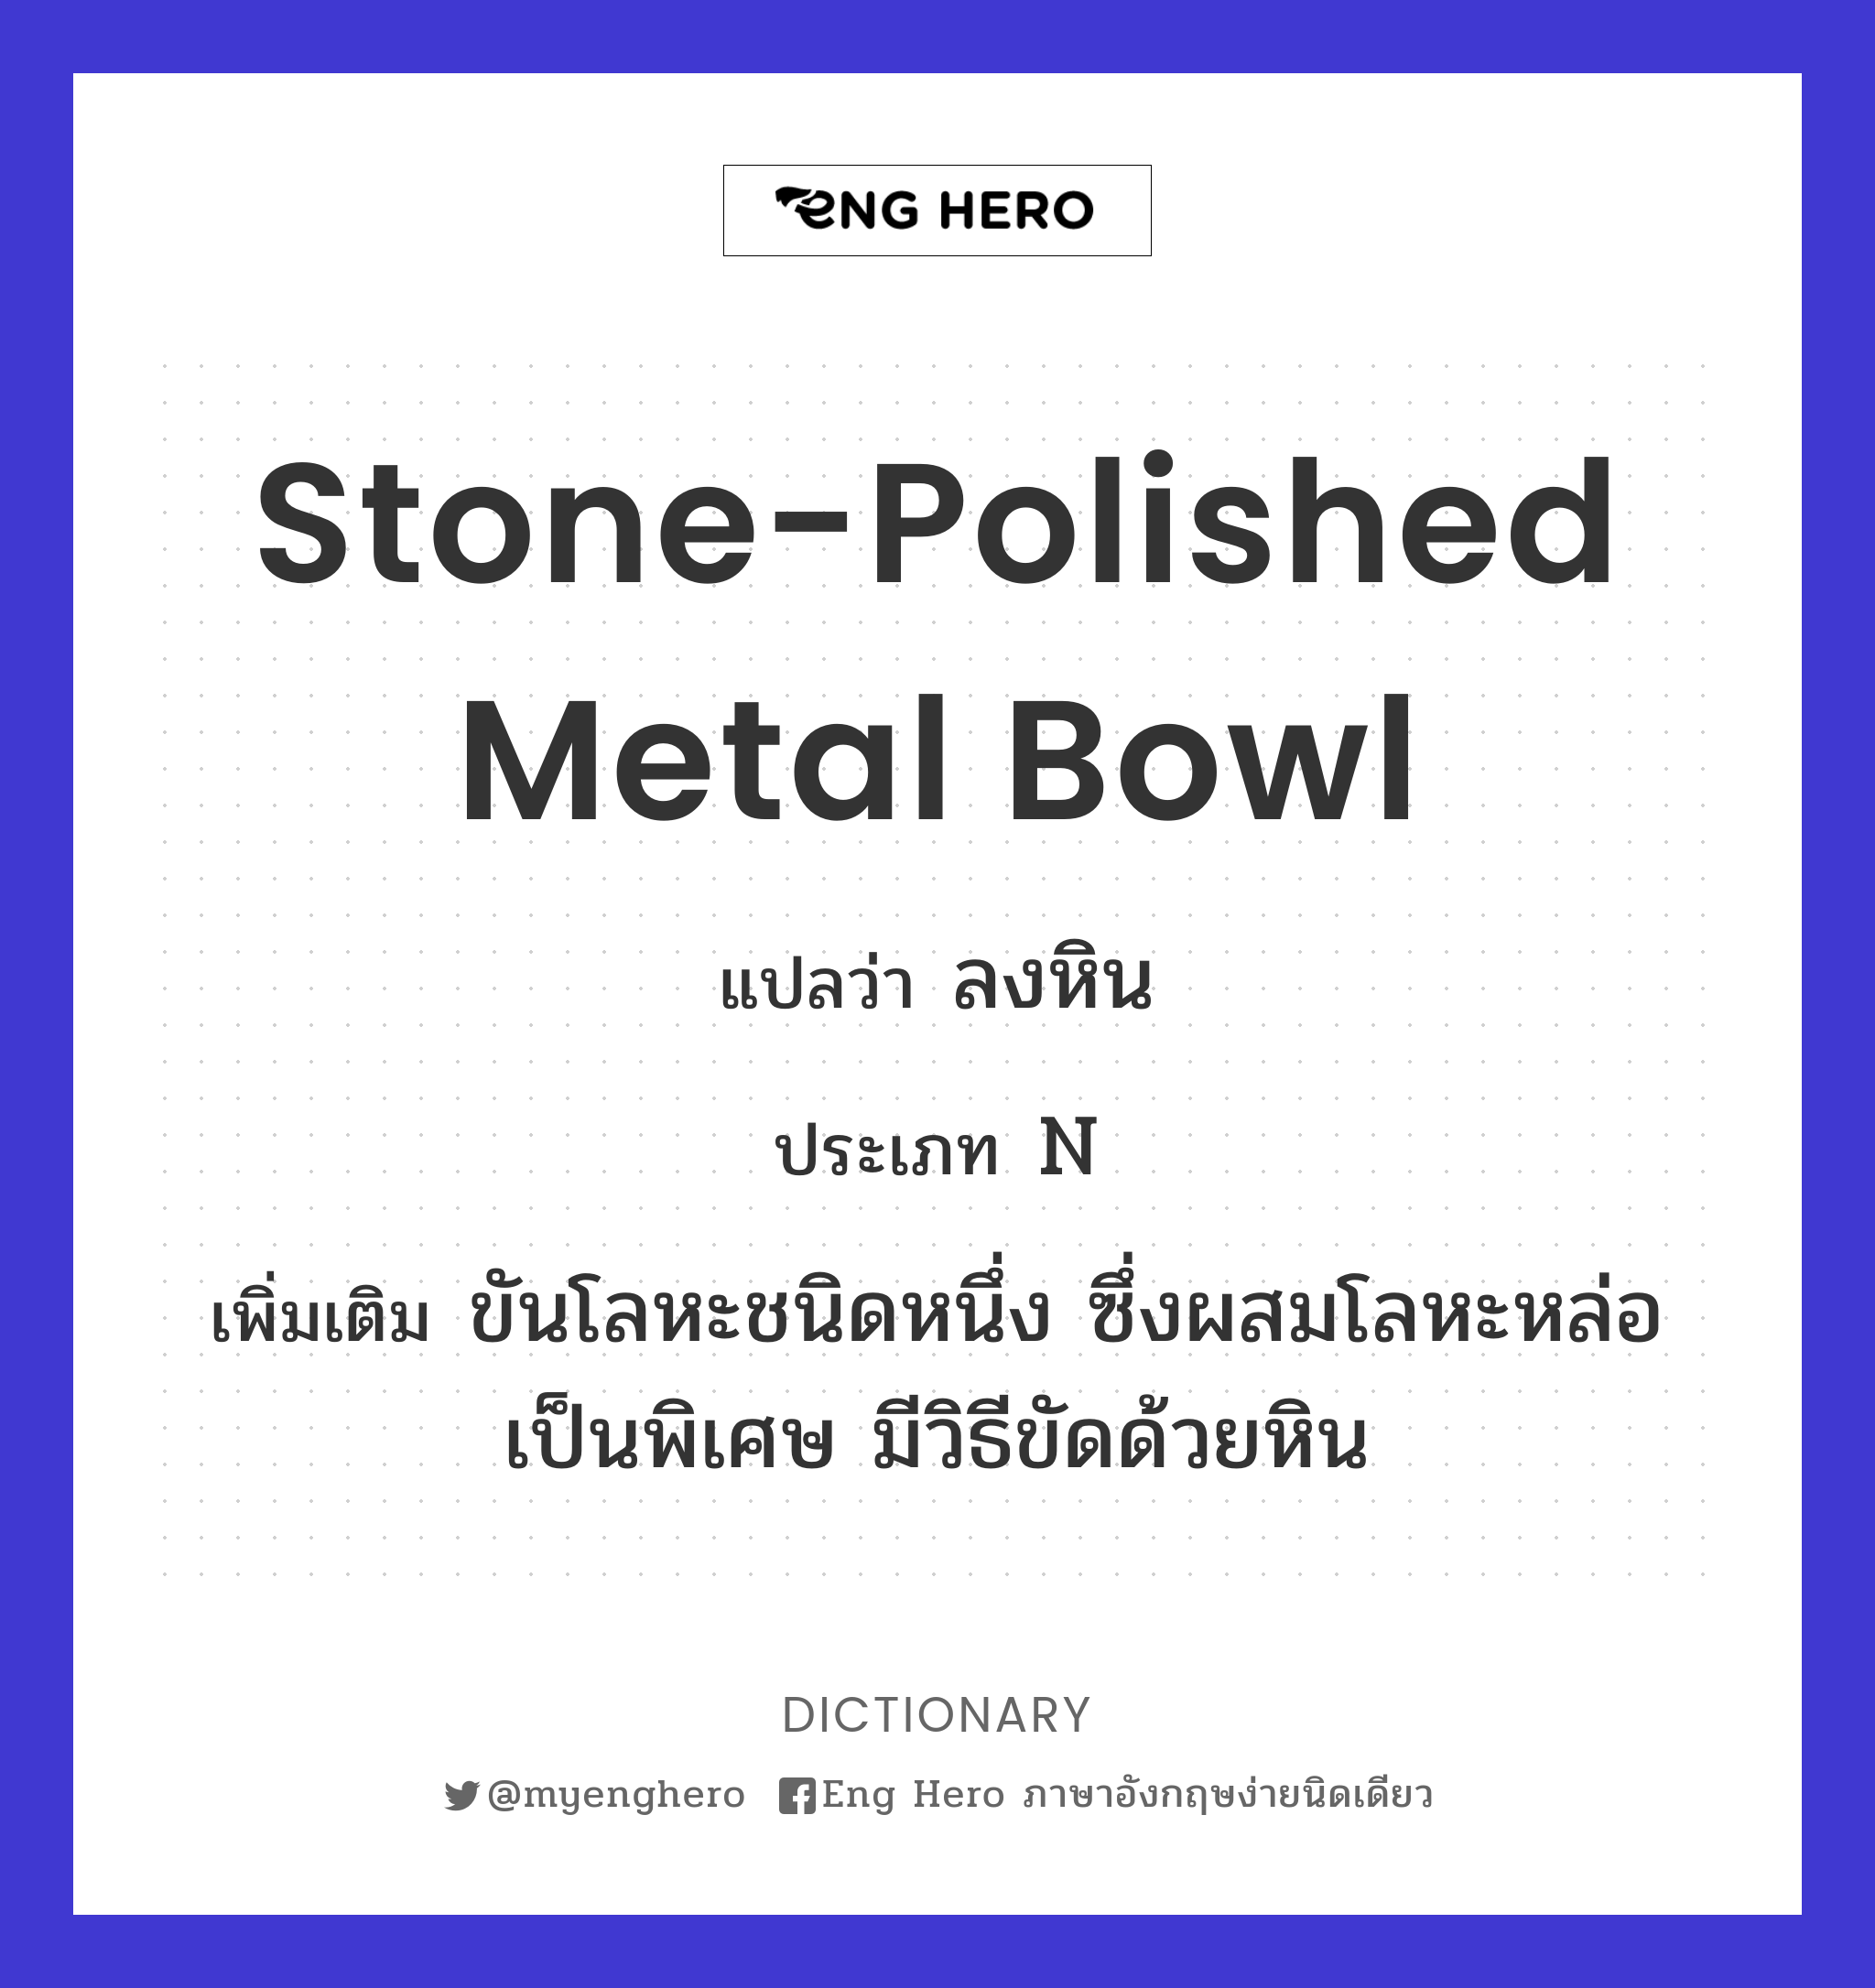 stone-polished metal bowl